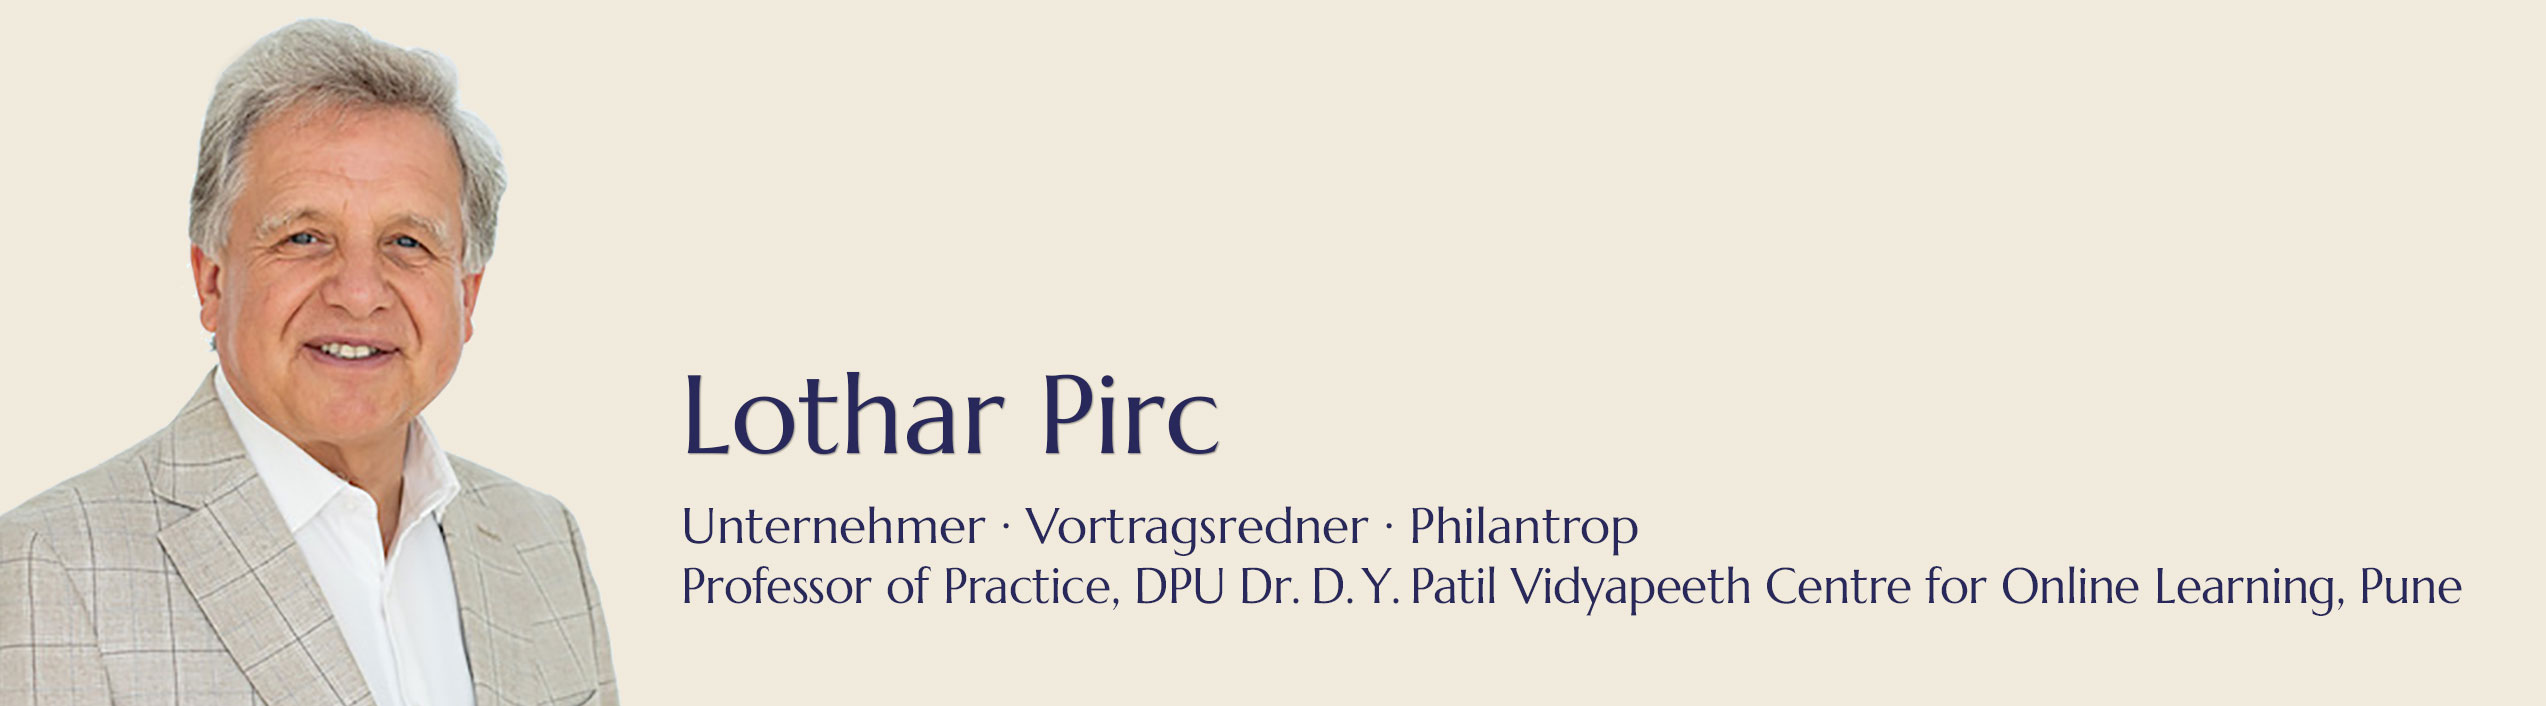 Lothar Pirc